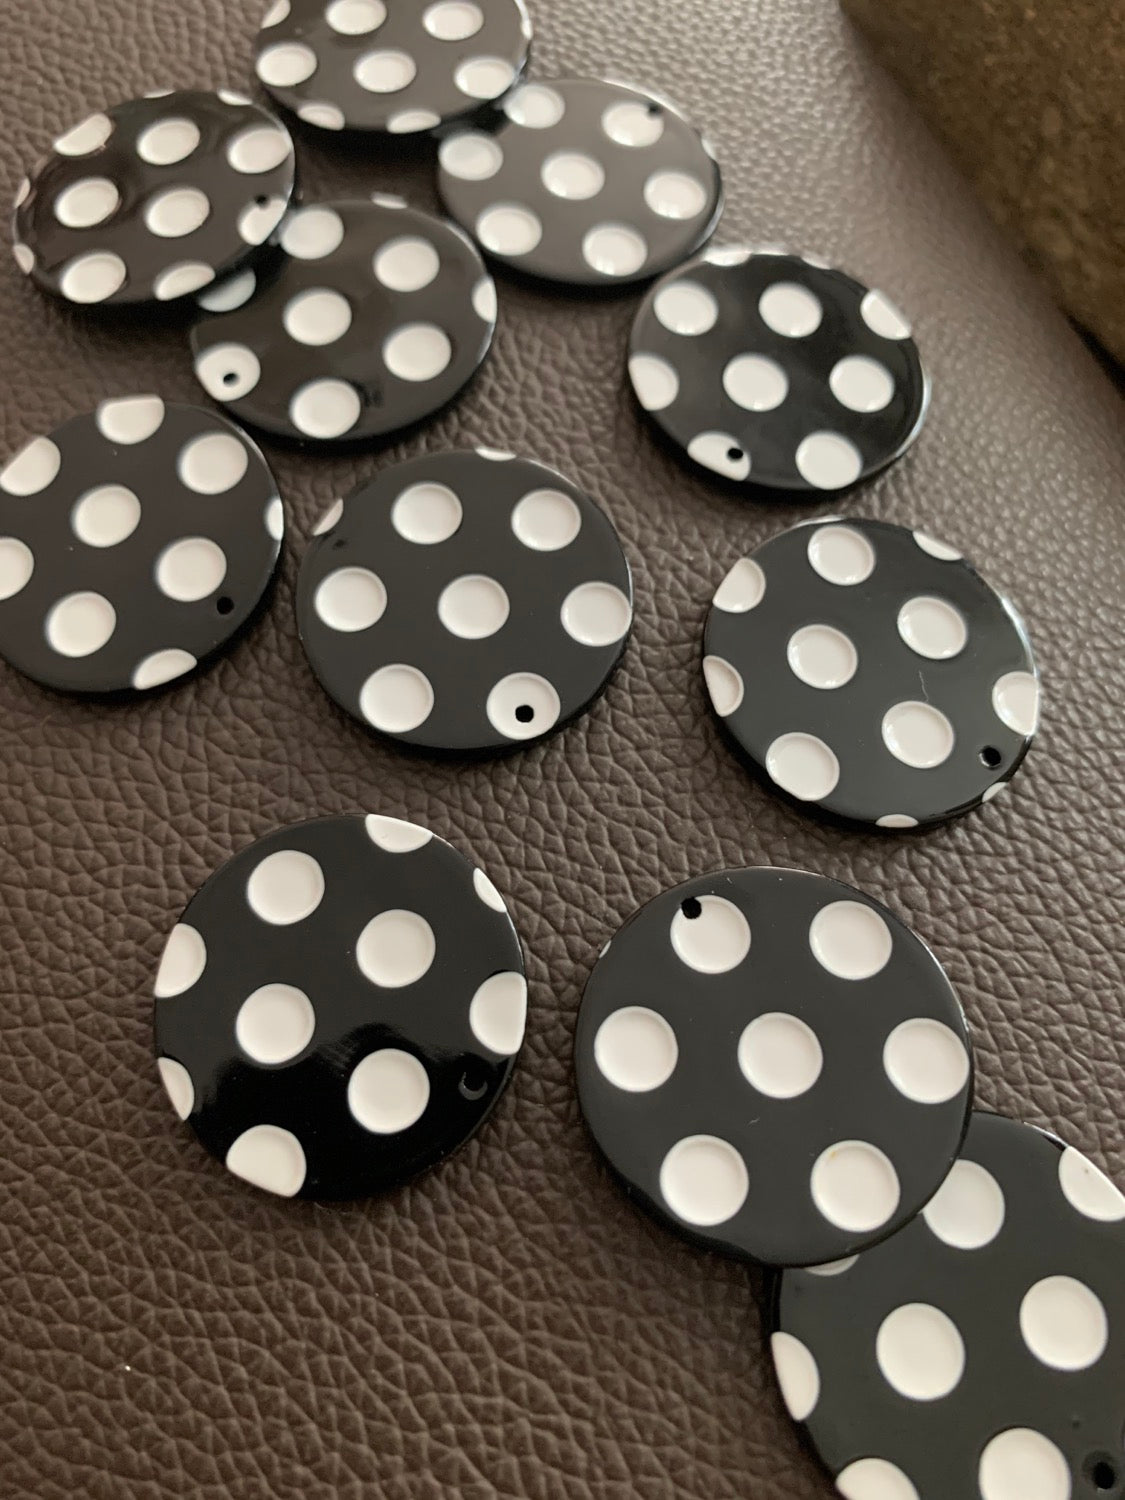 27mm black and white pendant acrylic qty 1 / 20871 polka dot